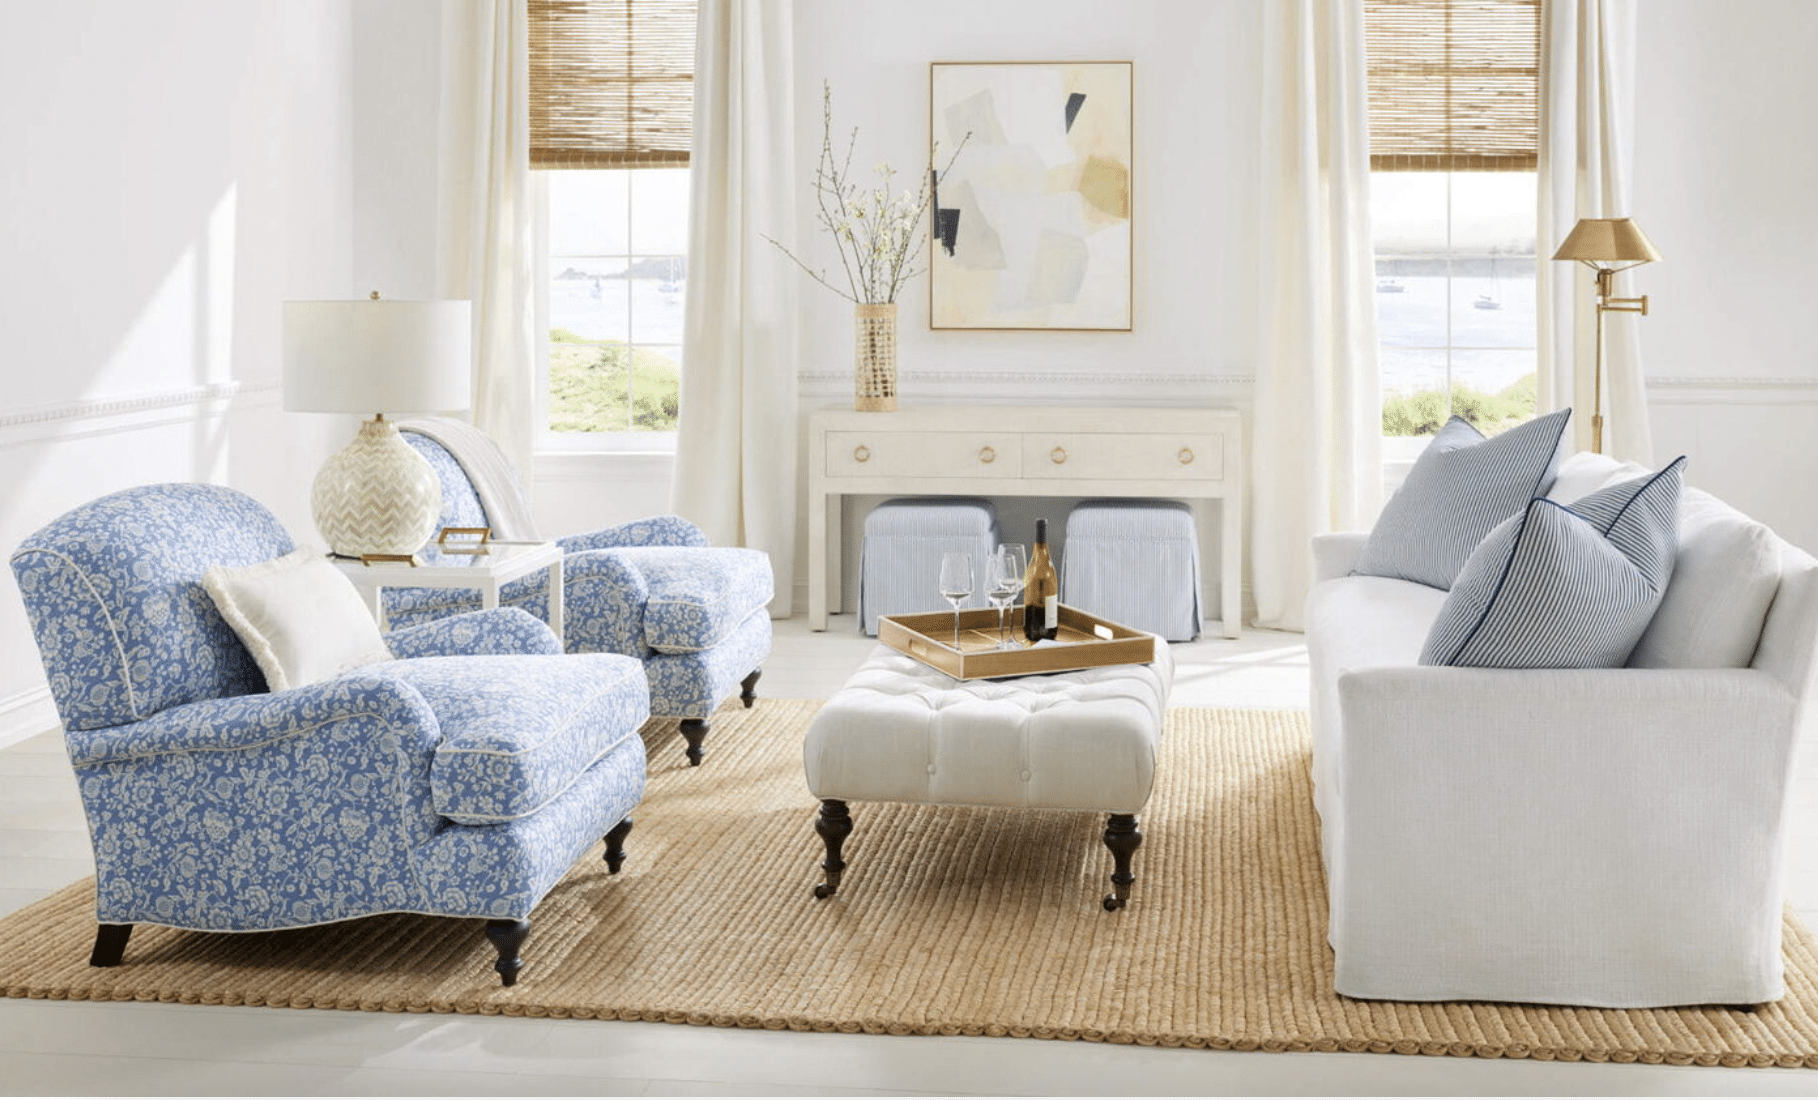 Serena & Lily blue and white living room - living room designe - living room decor - showhouse